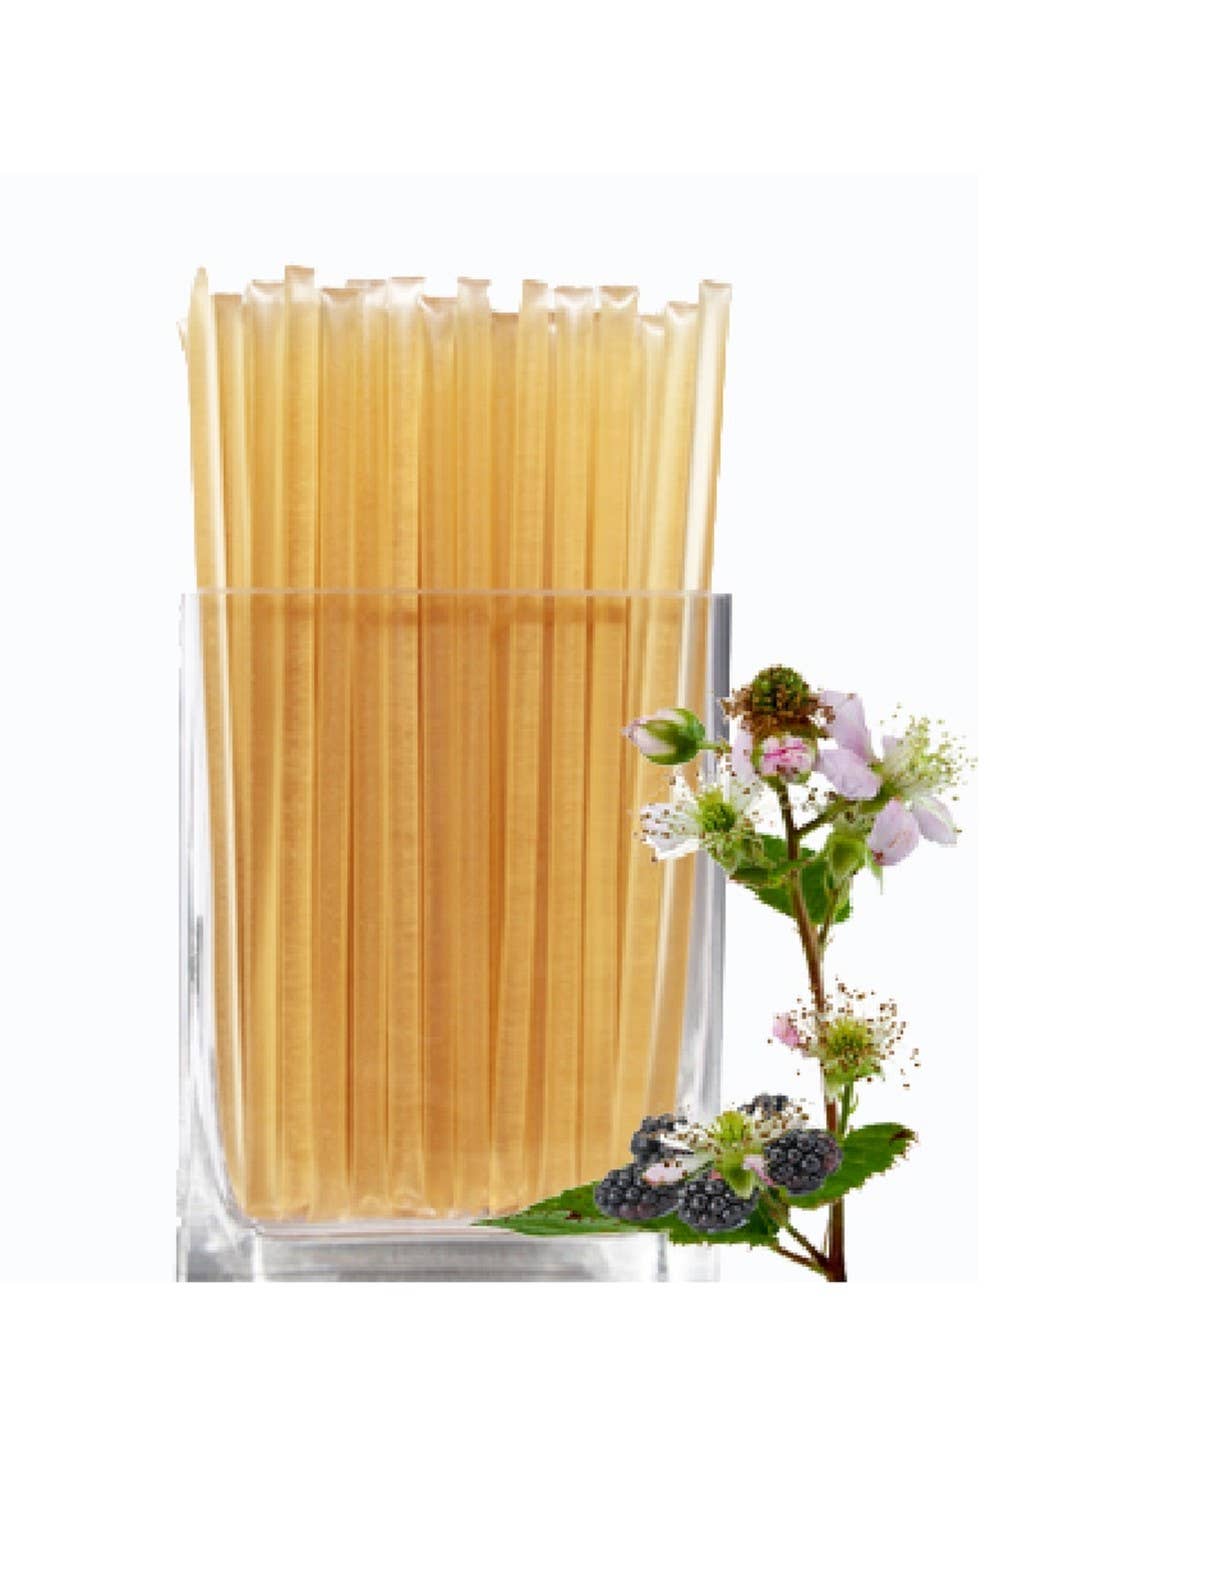 Bee Krazy Honey Sticks - Blackberry Blossom 50 Ct. Refill